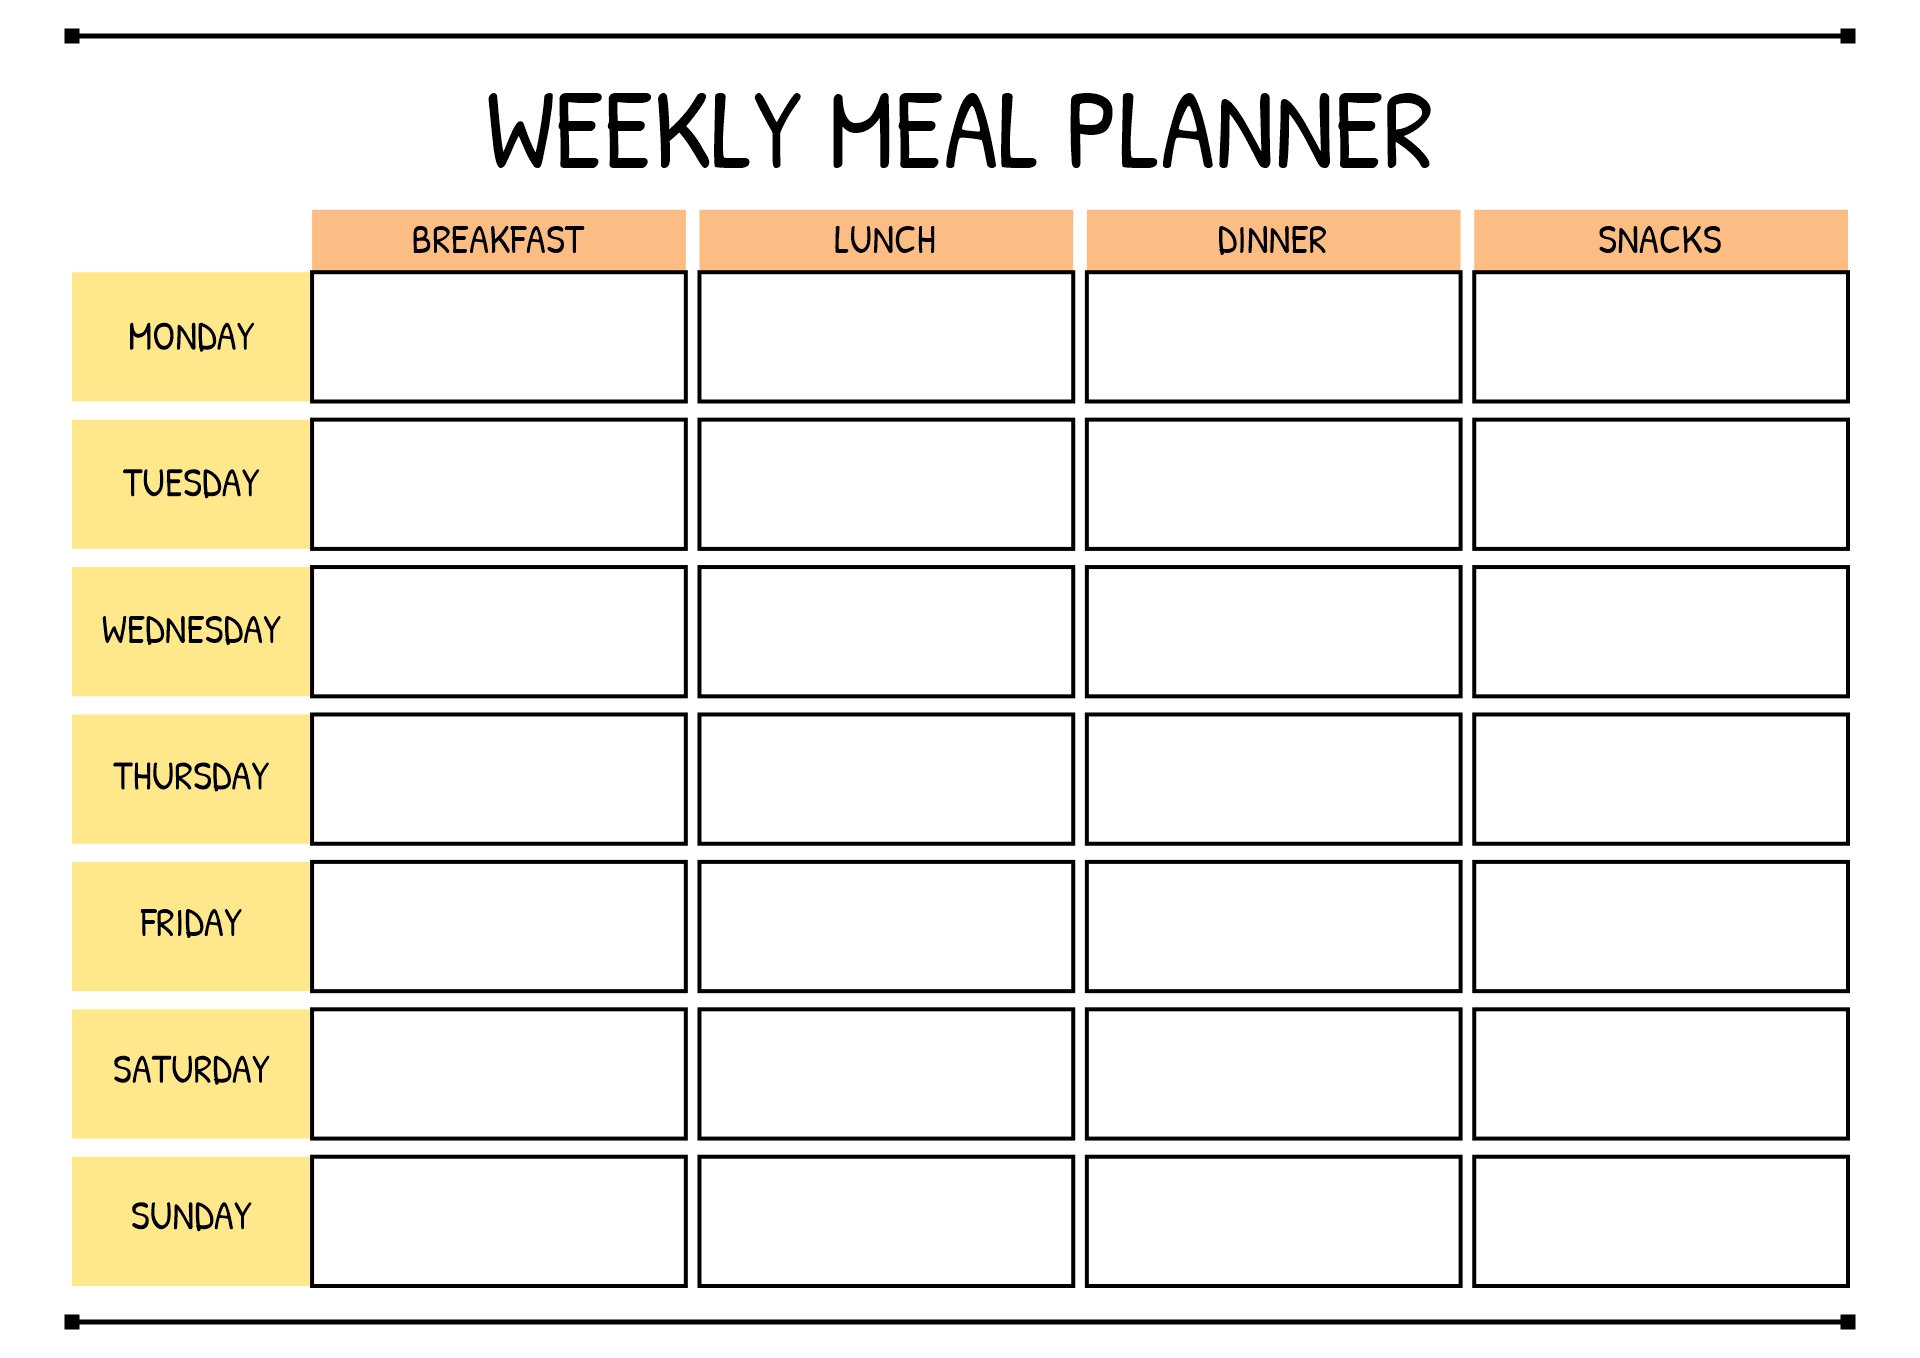 18 Daily Meal Planning Worksheet - Free PDF at worksheeto.com